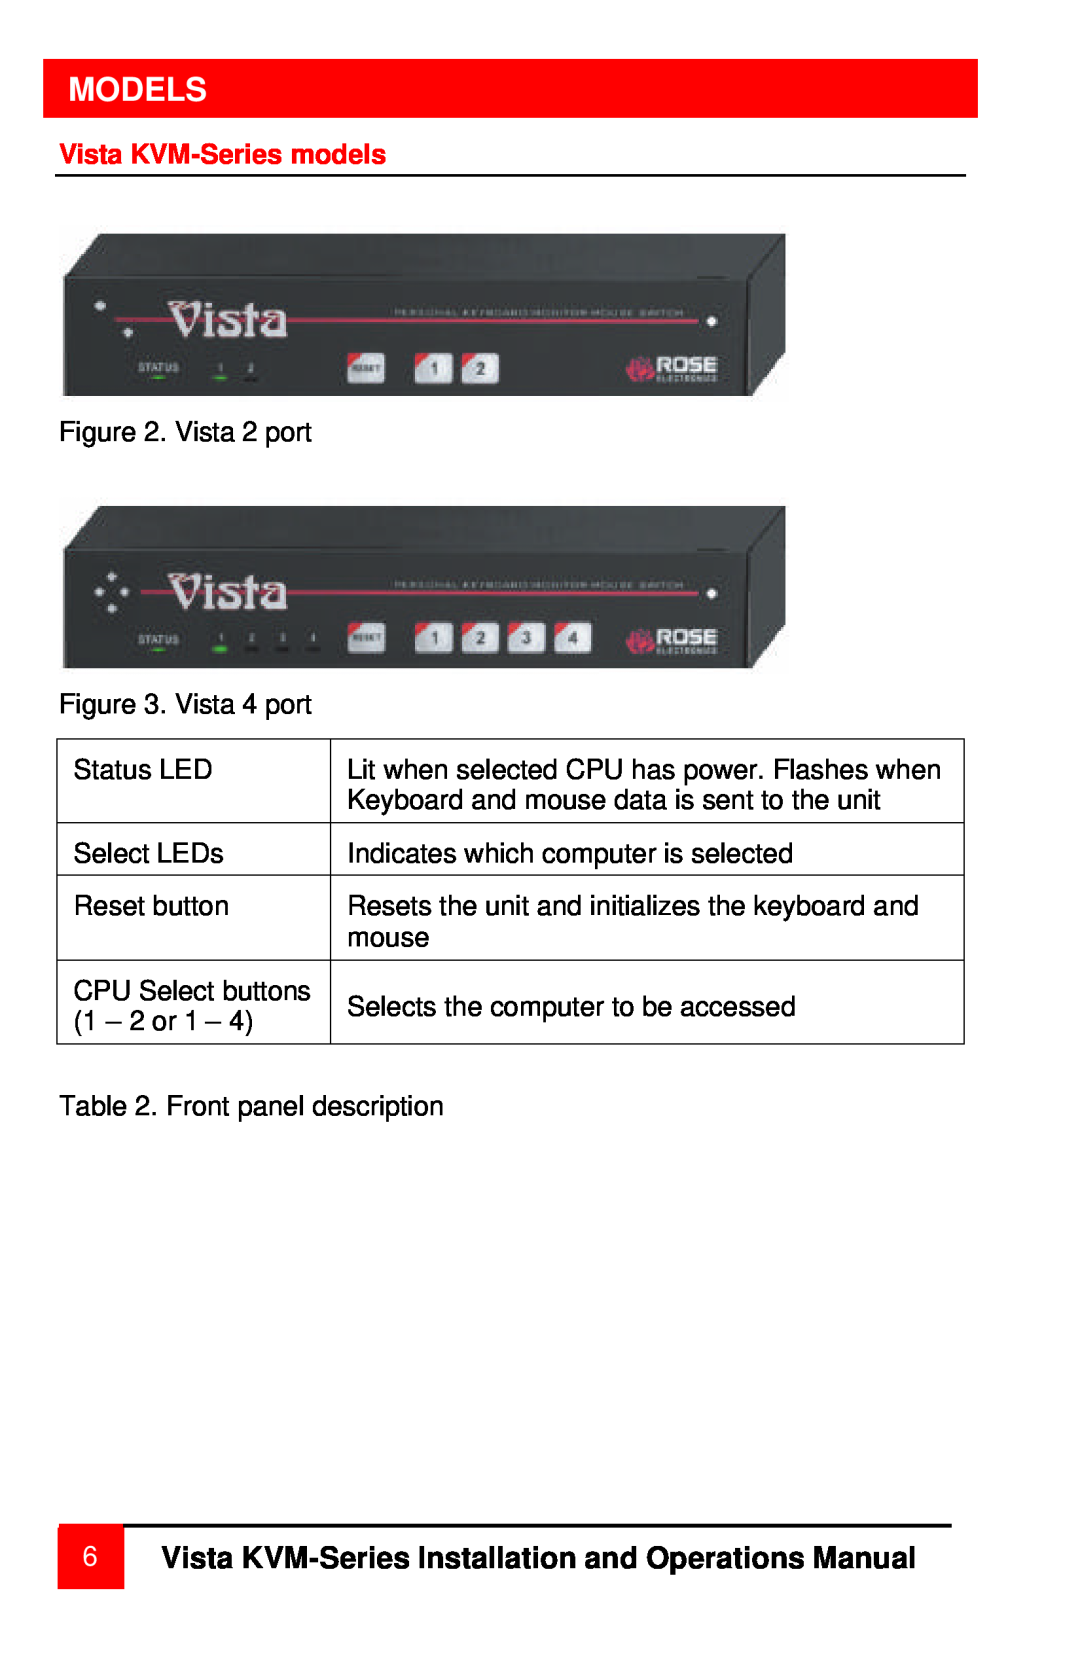 Rose electronic MAN-V8 manual Models, Vista KVM-Series Installation and Operations Manual, Vista KVM-Series models 